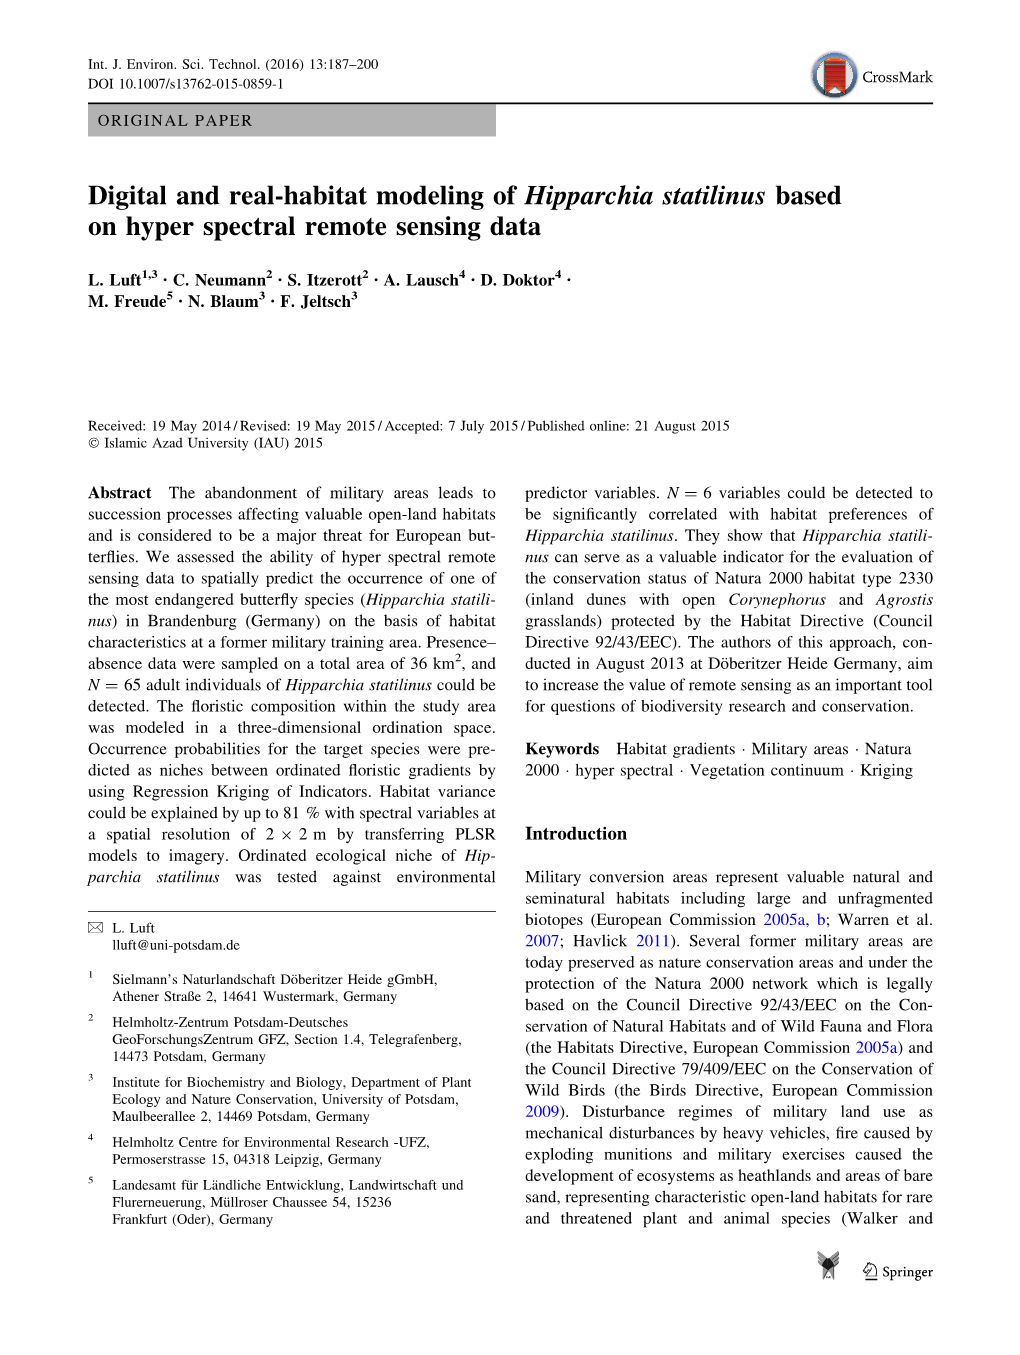 Digital and Real-Habitat Modeling of Hipparchia Statilinus Based on Hyper Spectral Remote Sensing Data